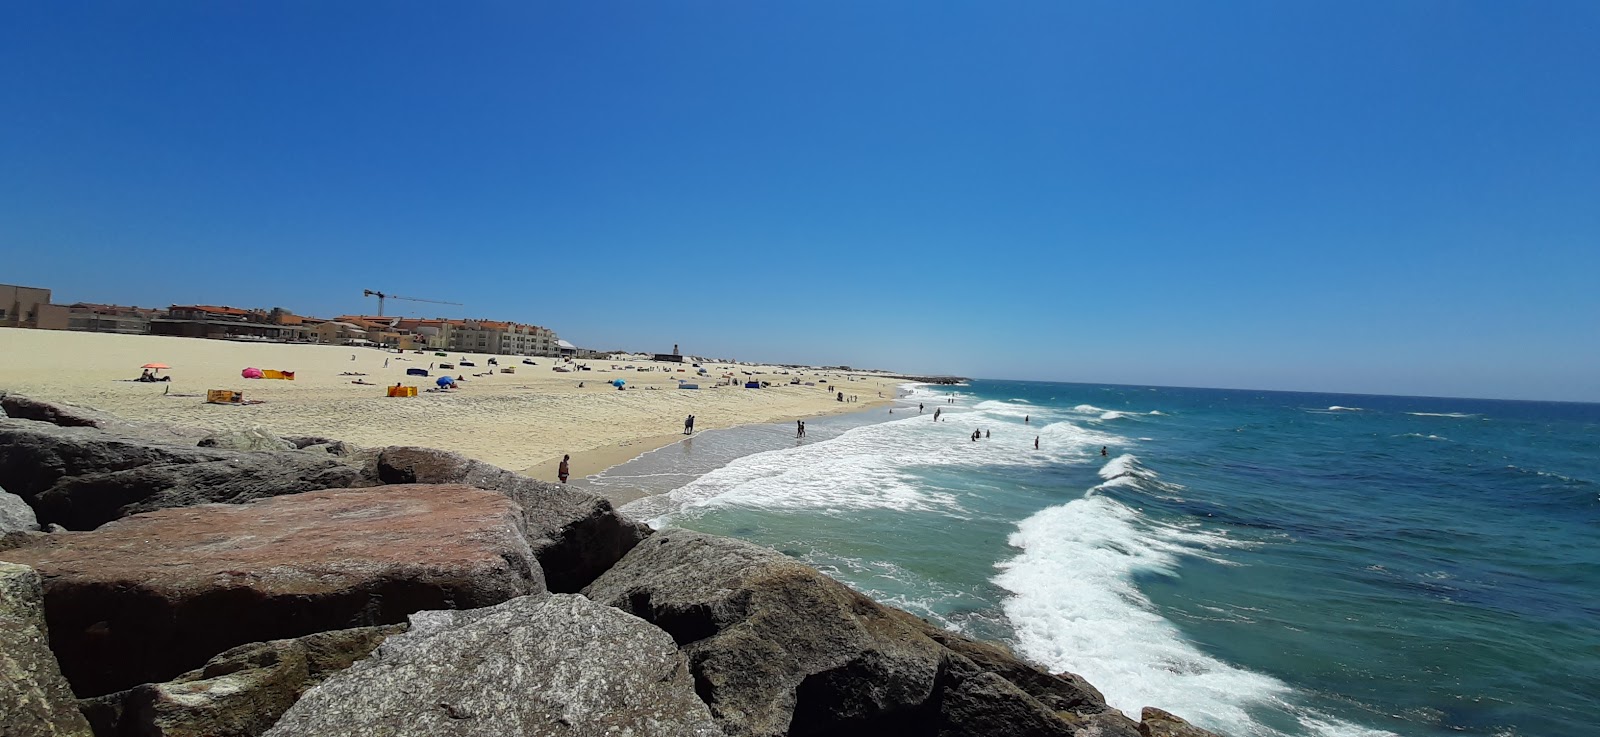 Photo of Praia da Costa Nova with turquoise pure water surface